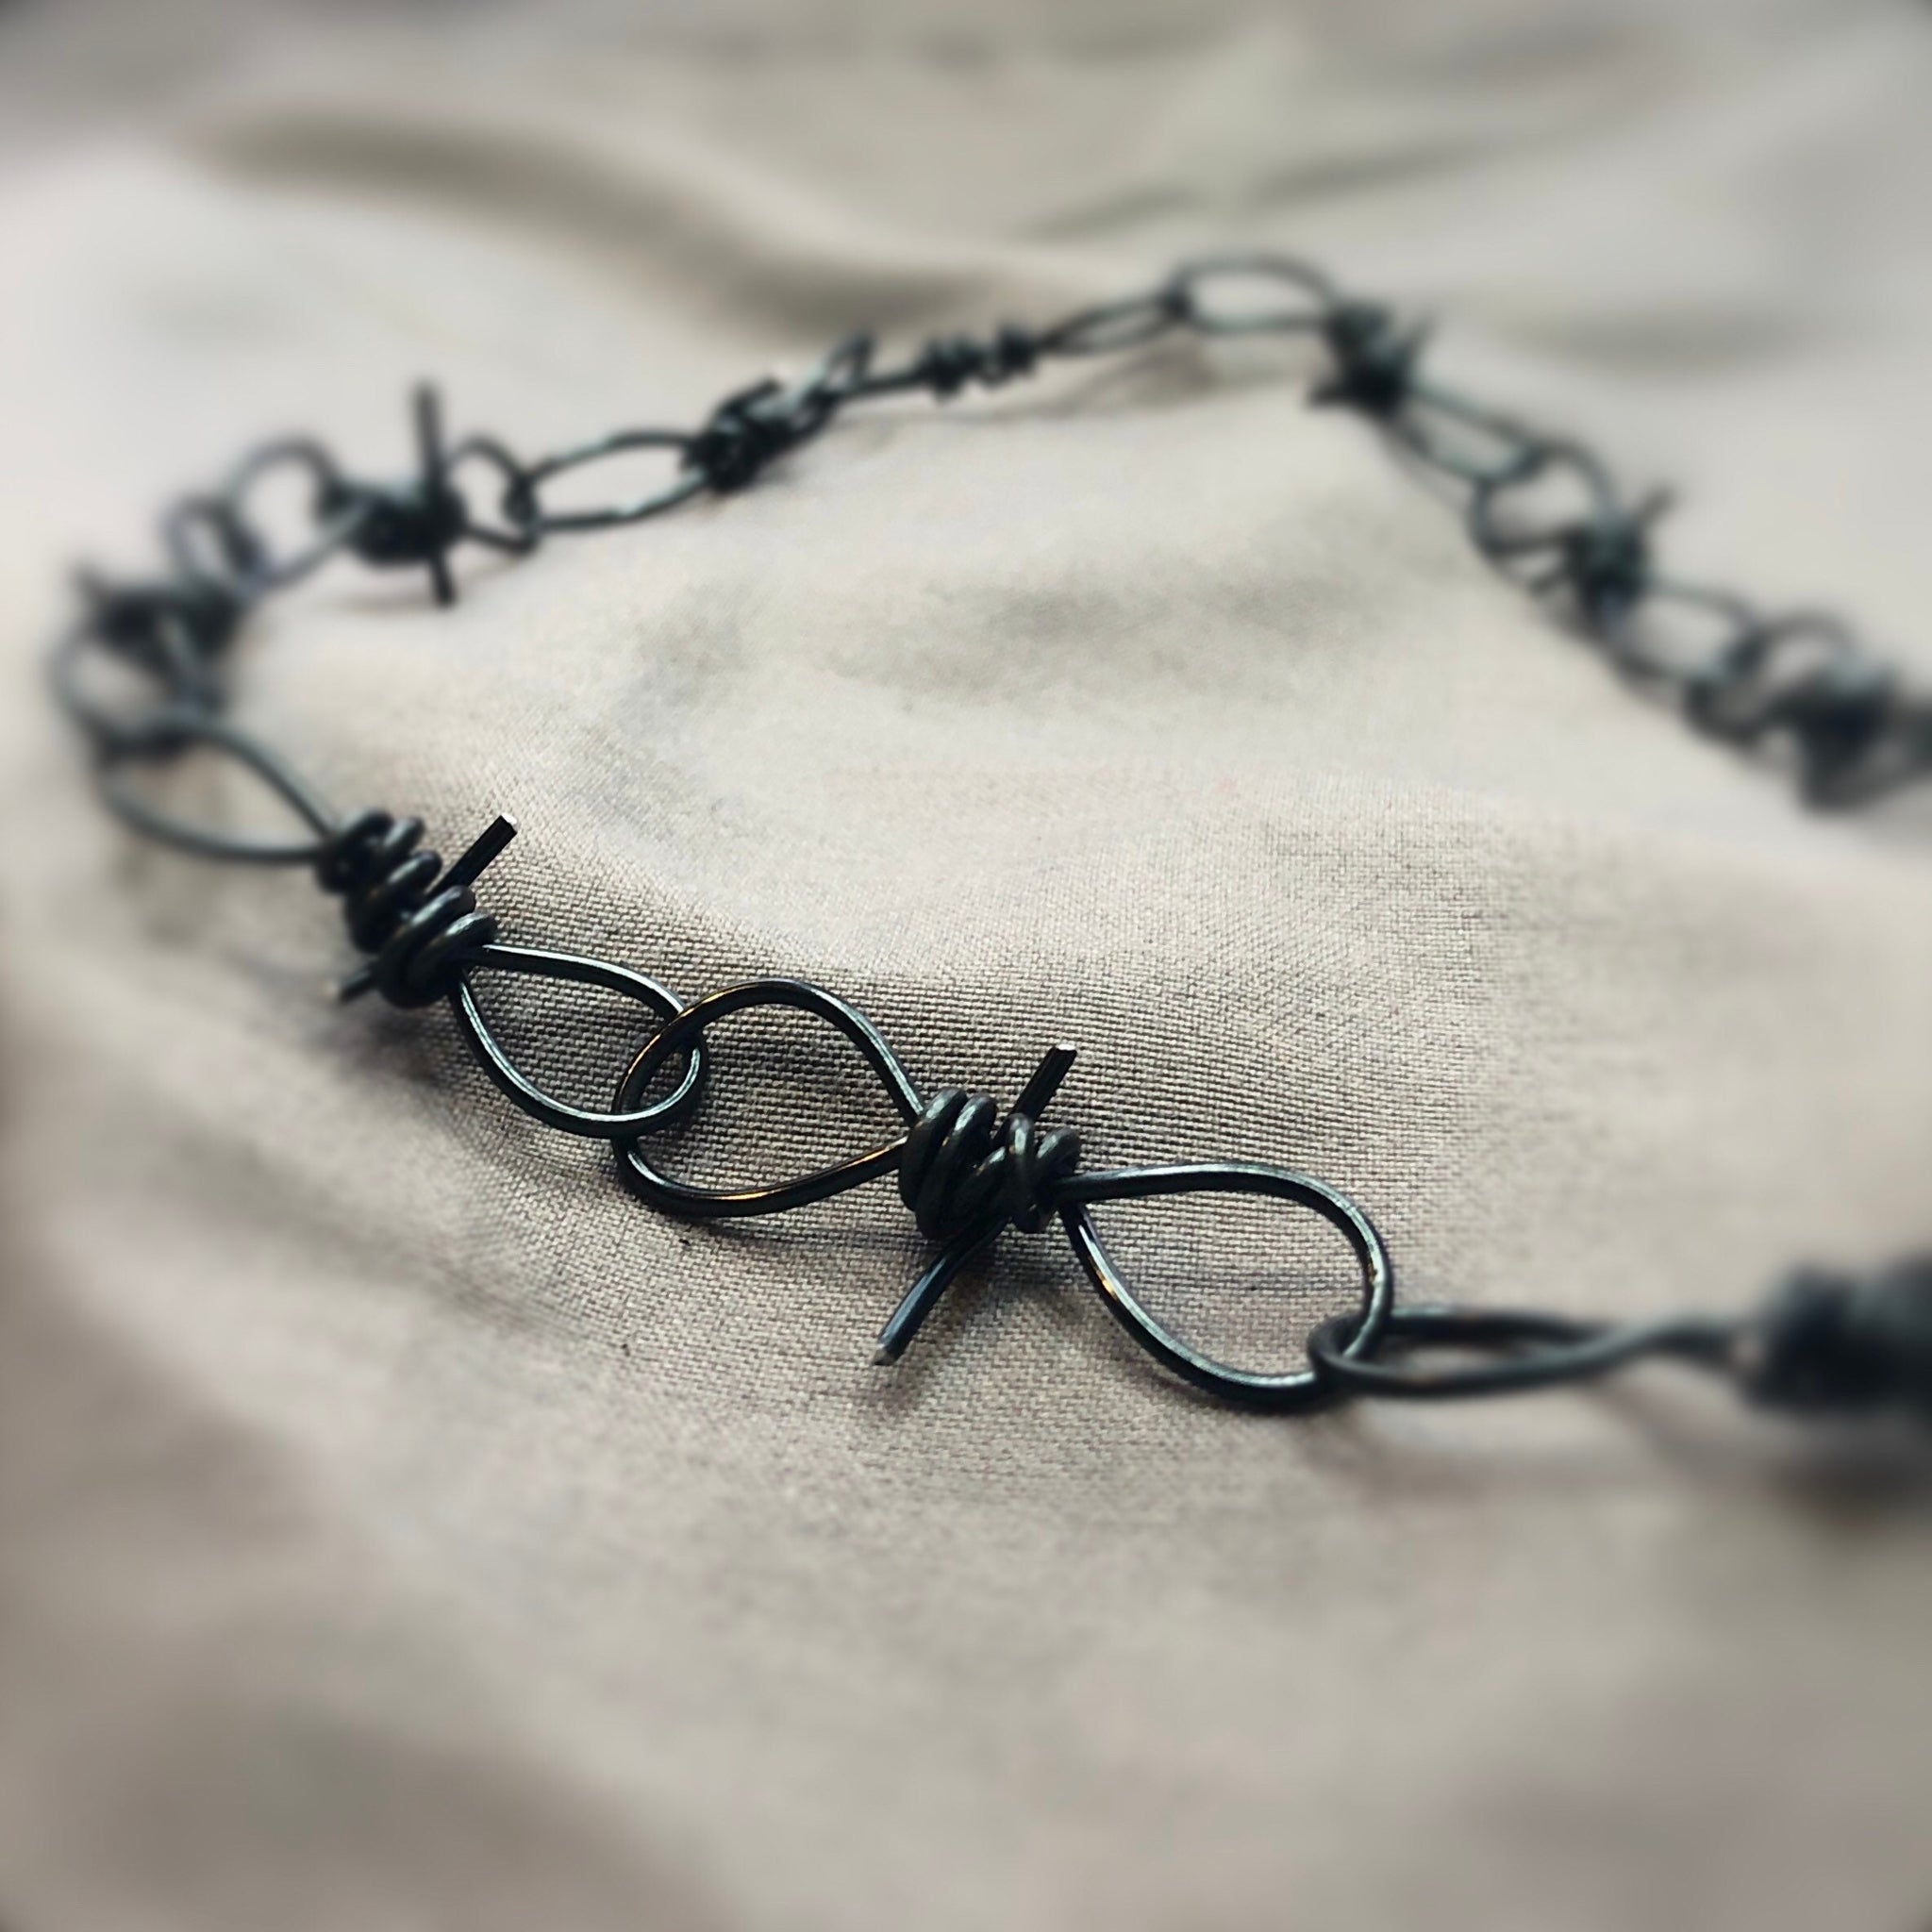 Black vampire jewelry gothic choker necklace • Matching black